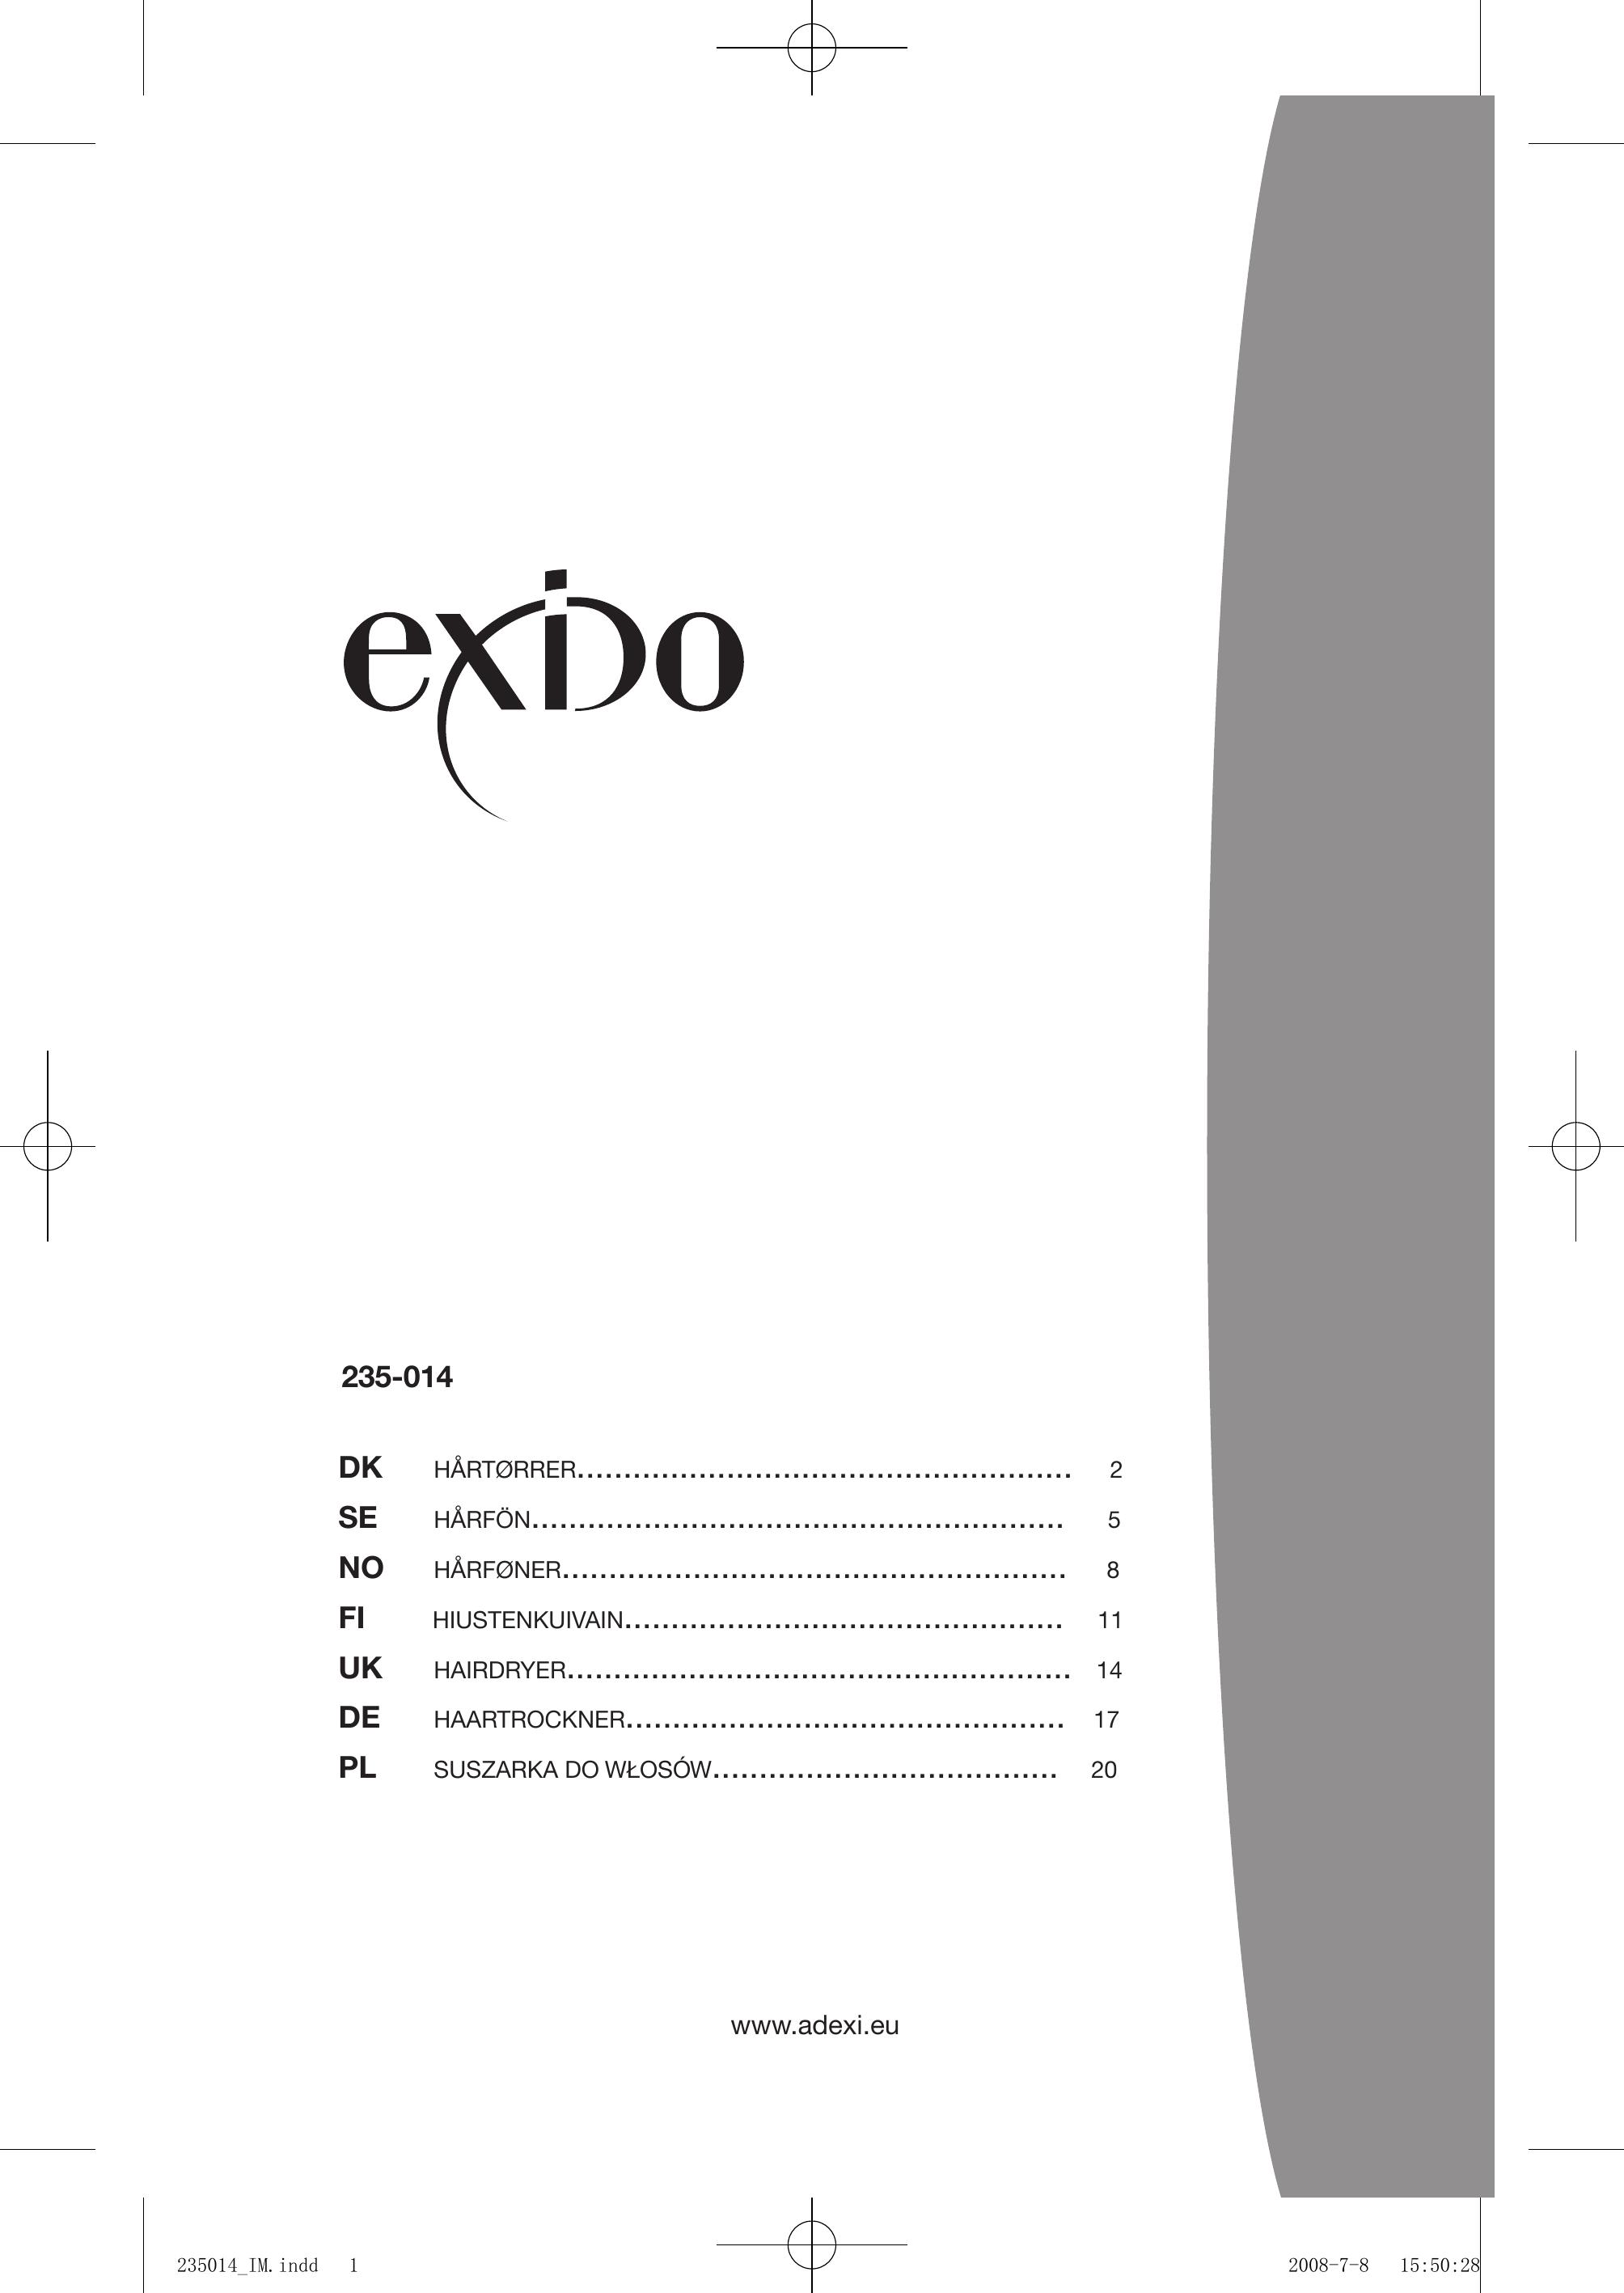 Exido 235-014 Hair Dryer User Manual